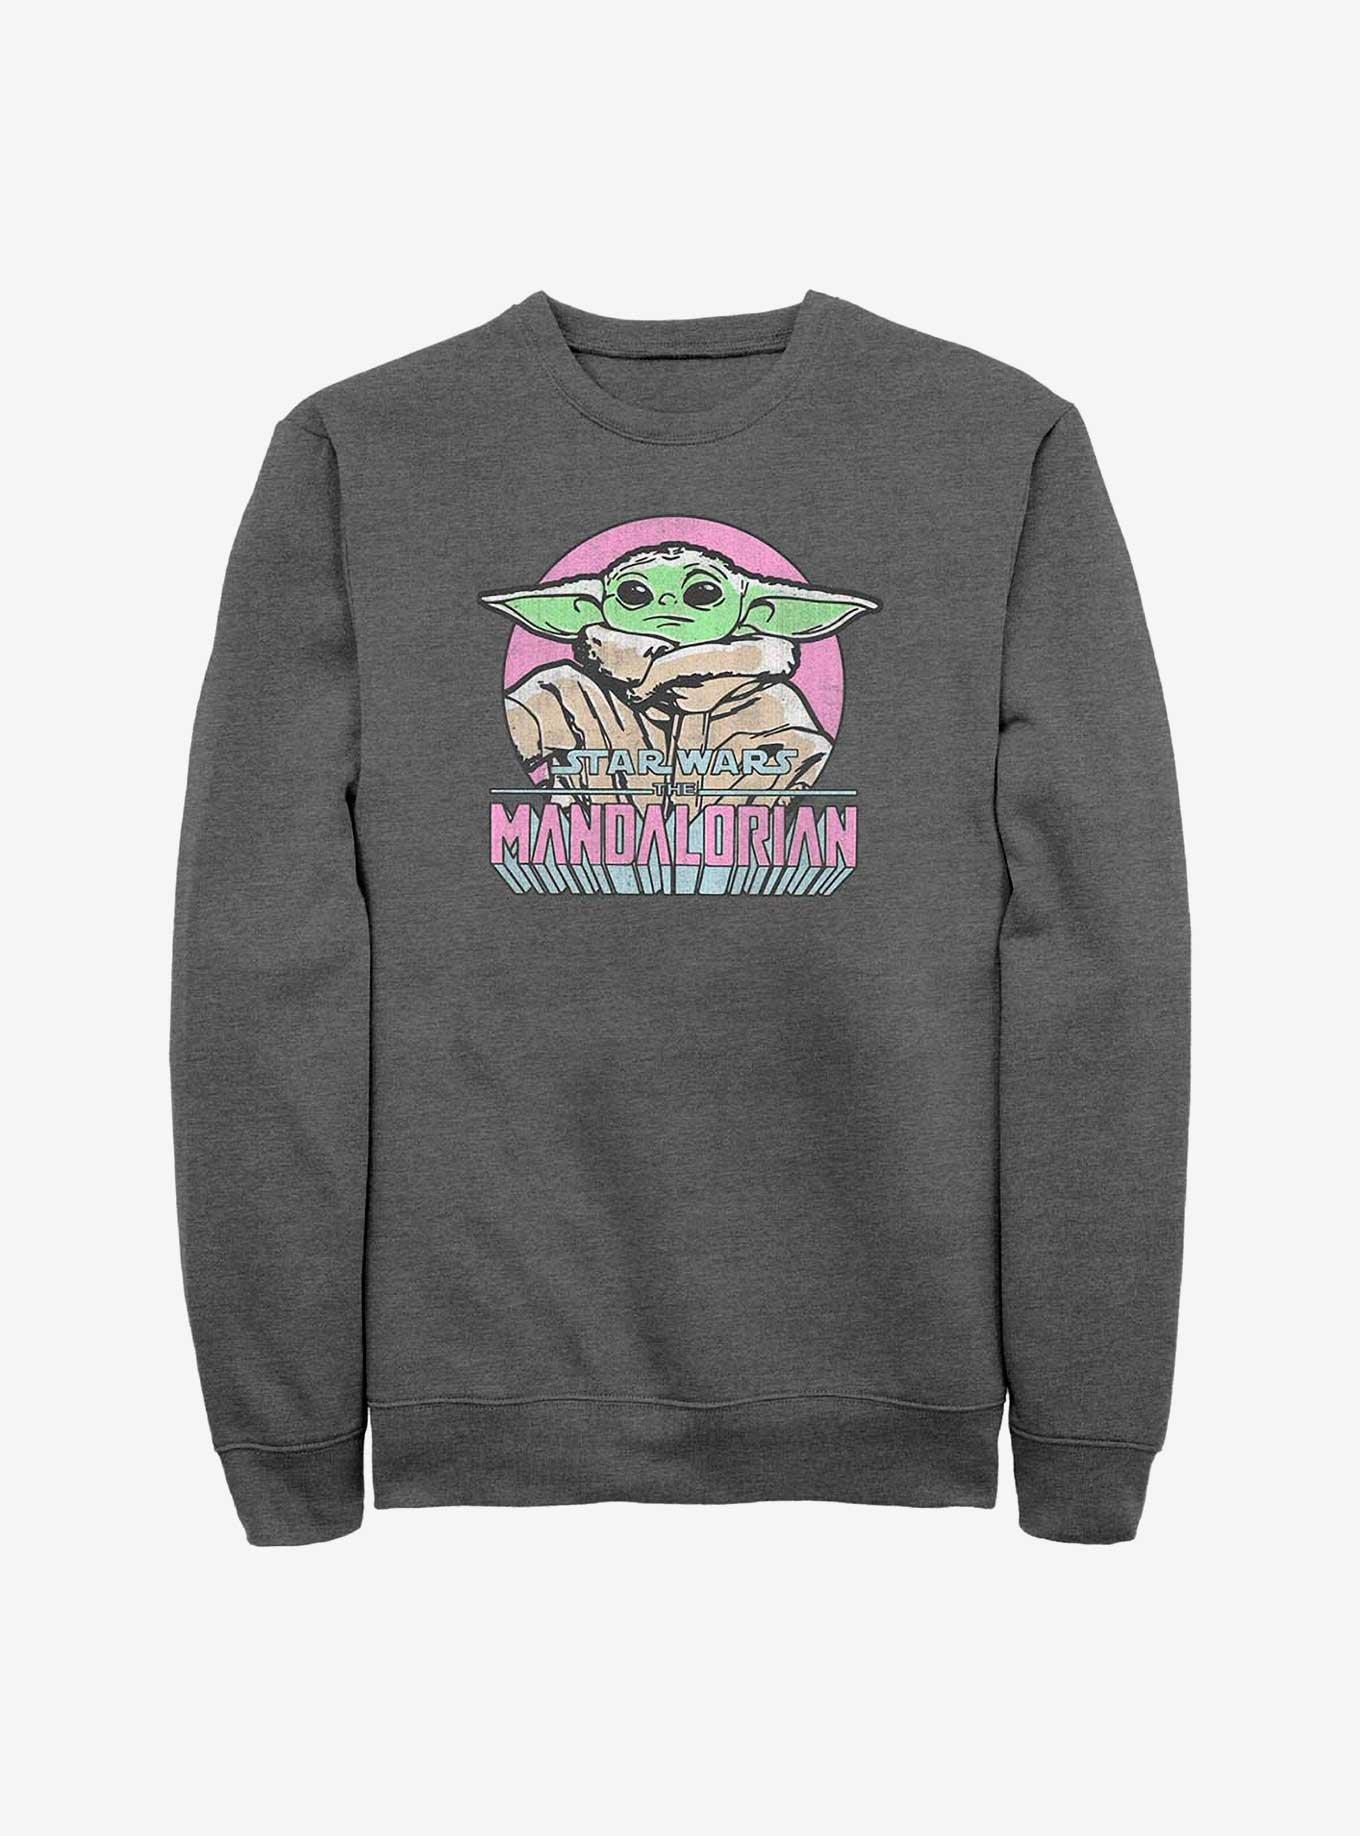 Star Wars The Mandalorian Child Sweatshirt